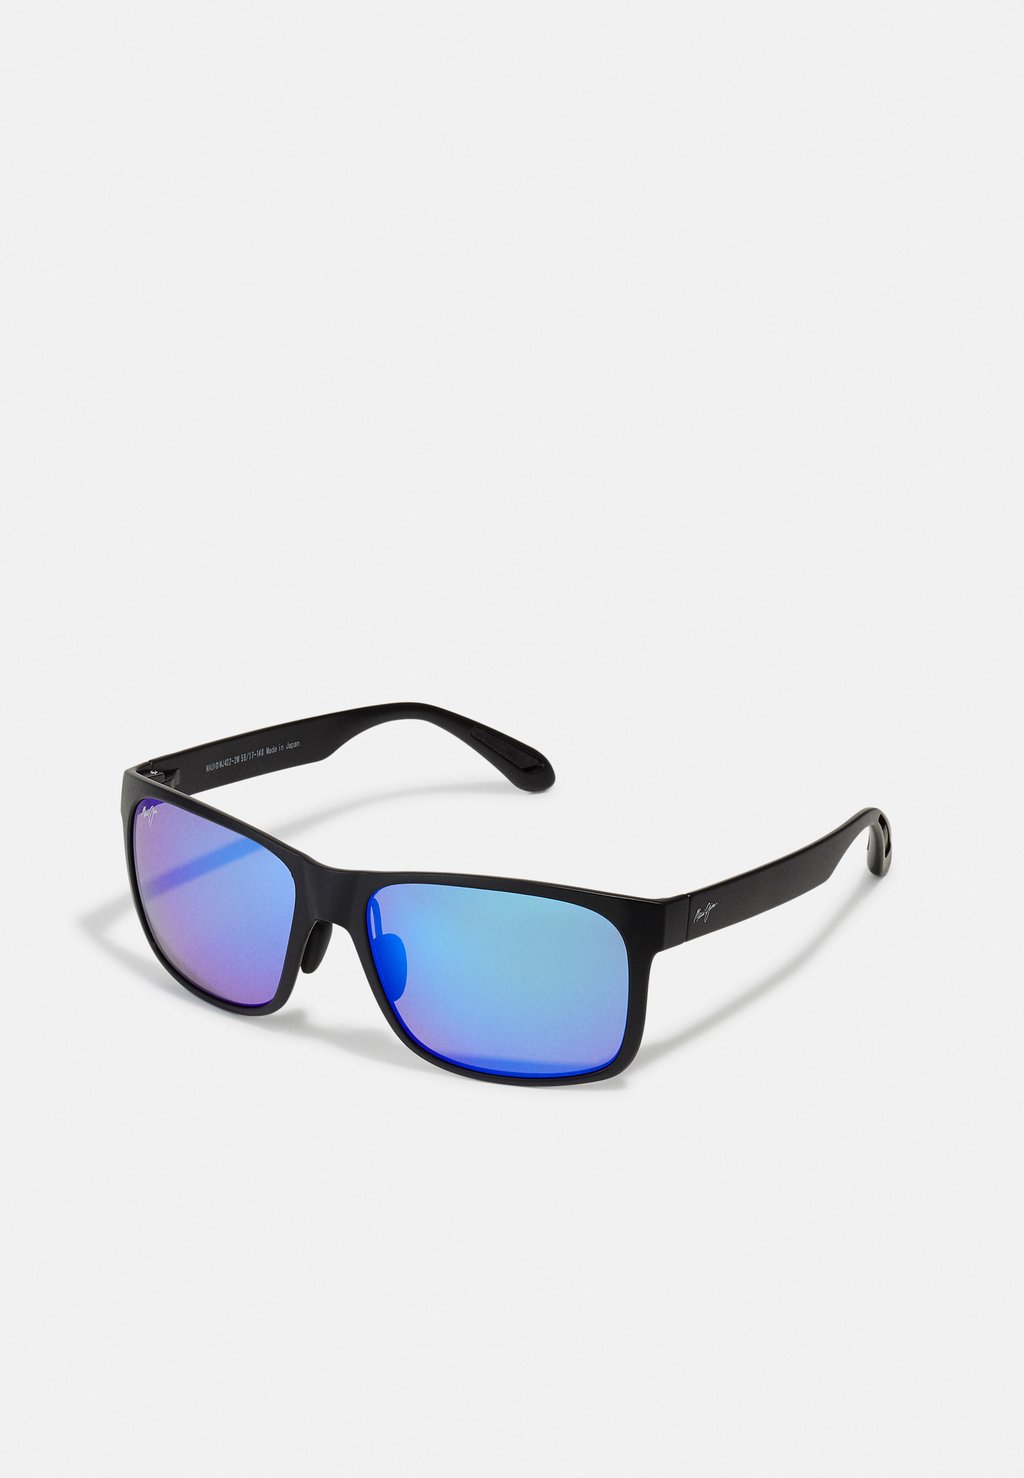 Солнцезащитные очки UNISEX Maui Jim, цвет matte black солнцезащитные очки kanaio coast maui jim цвет matte soft black white blue